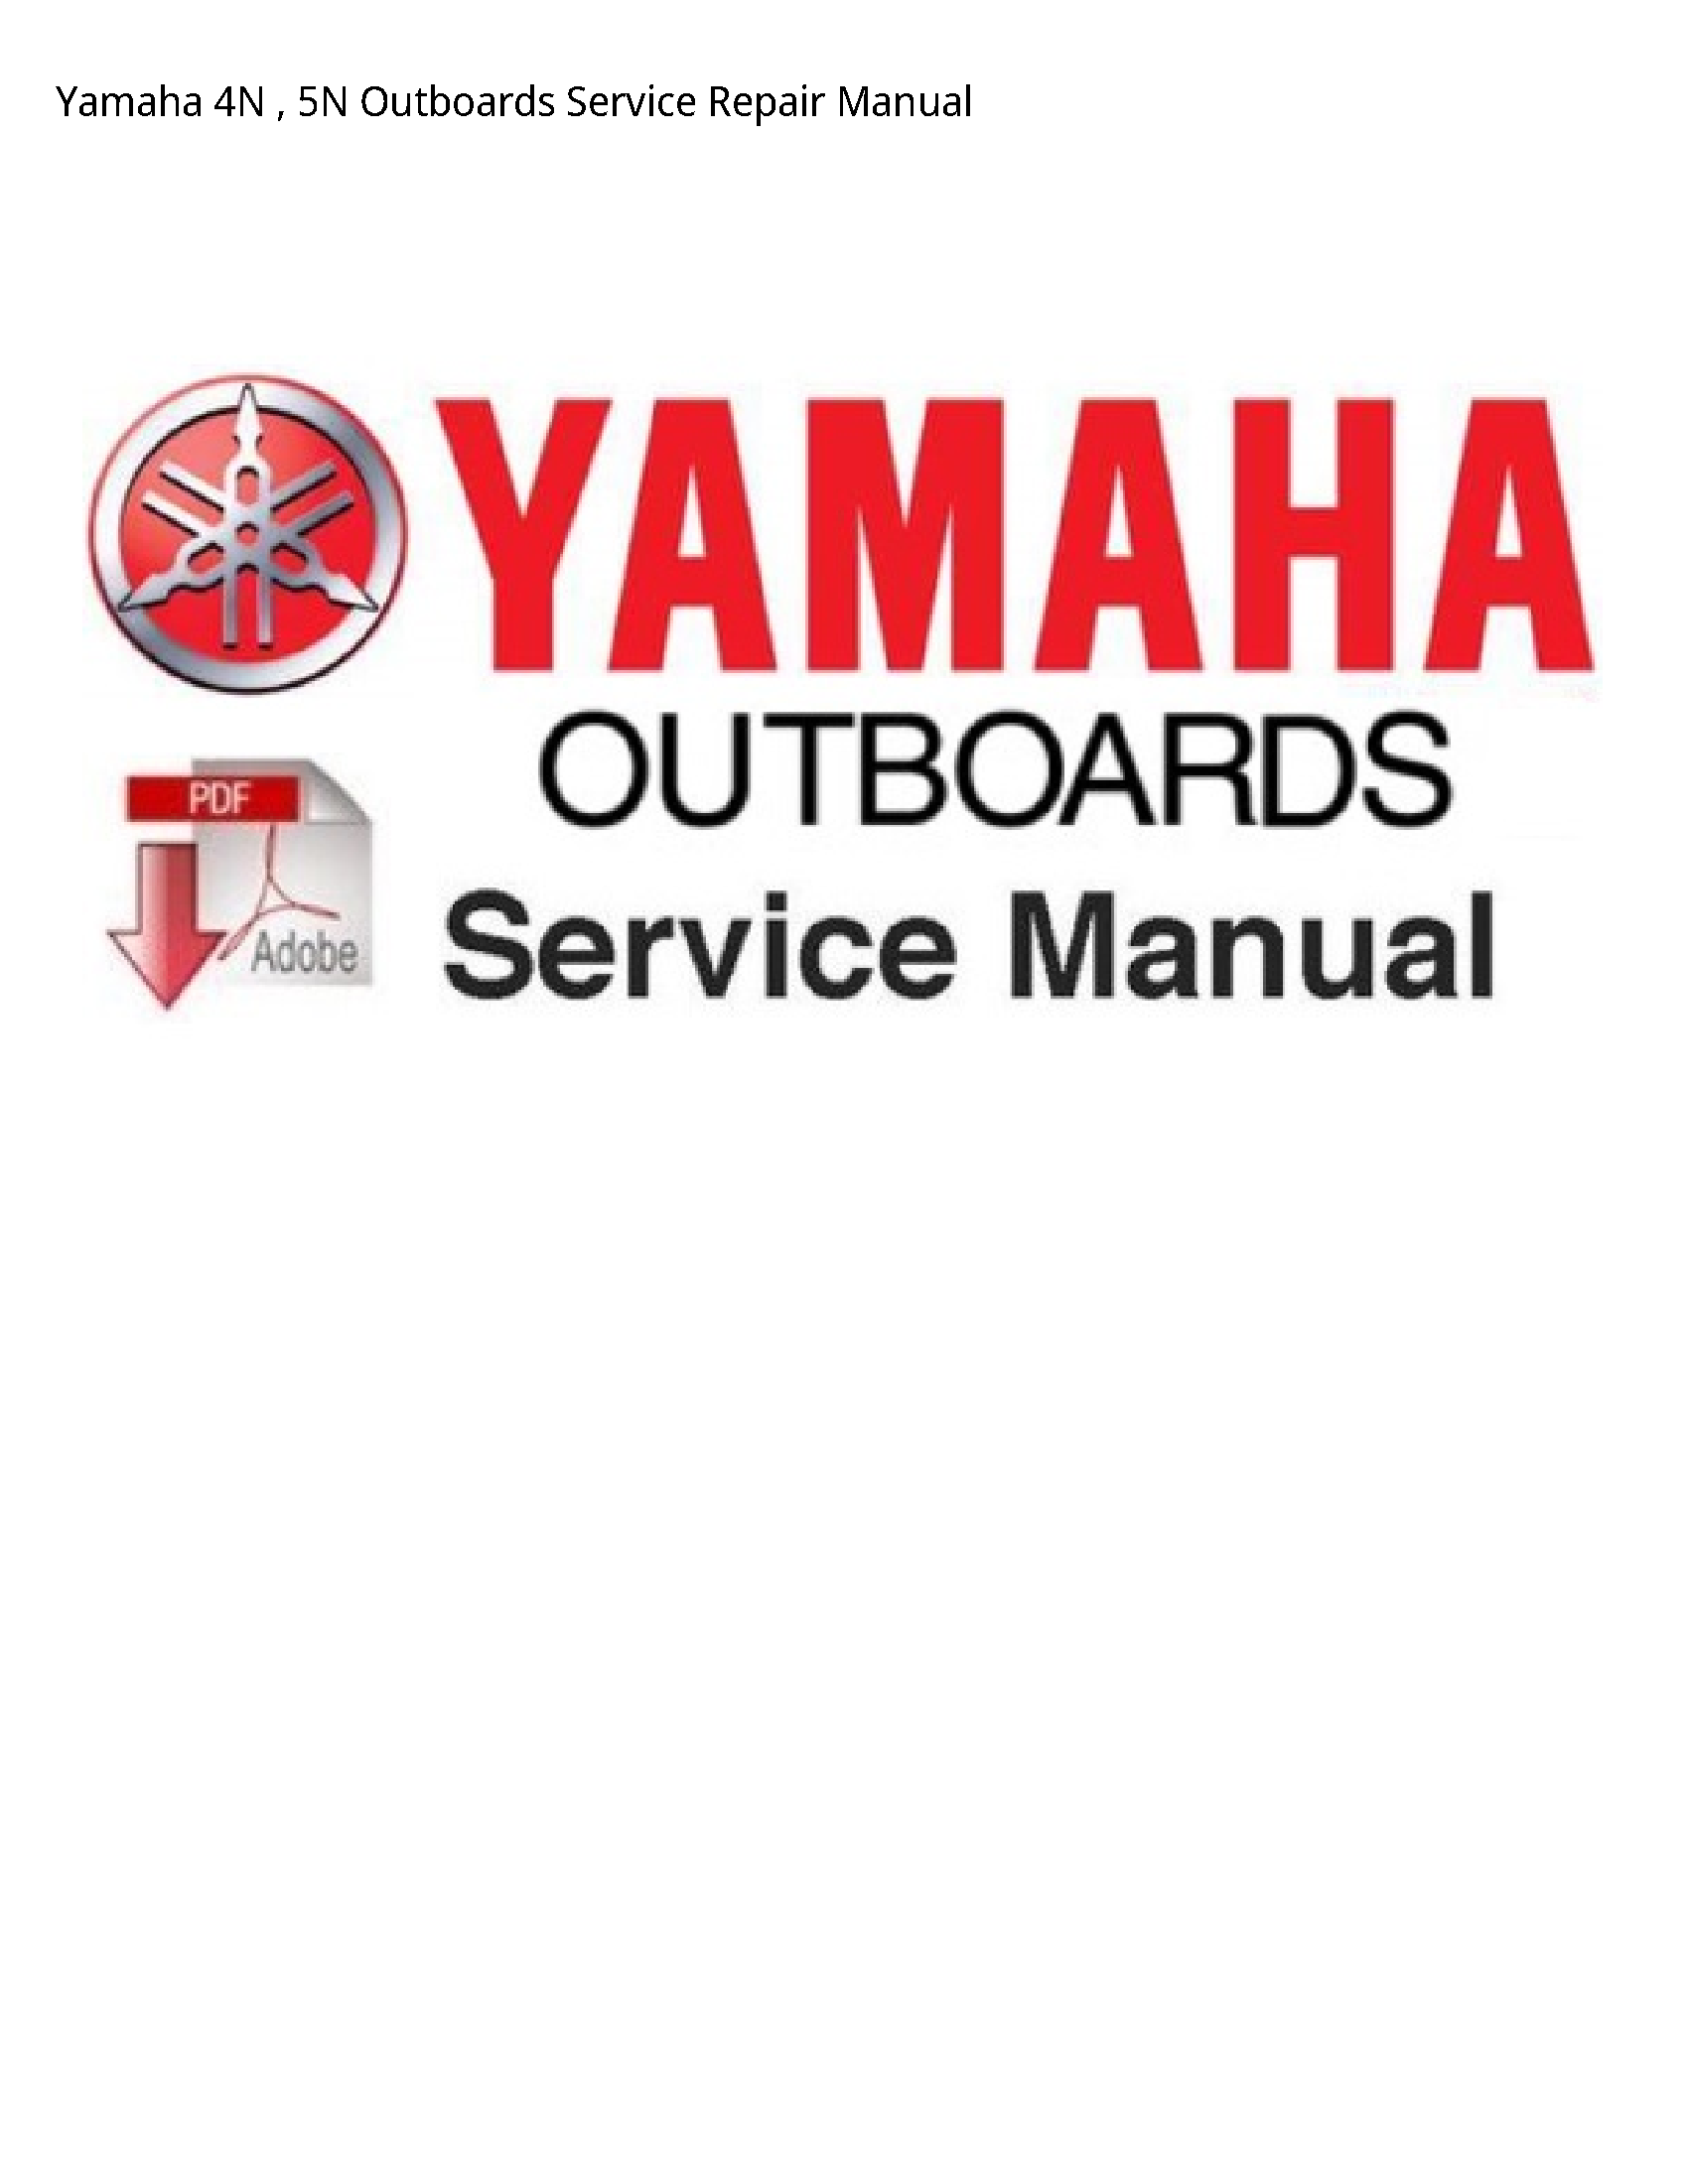 Yamaha 4N Outboards manual